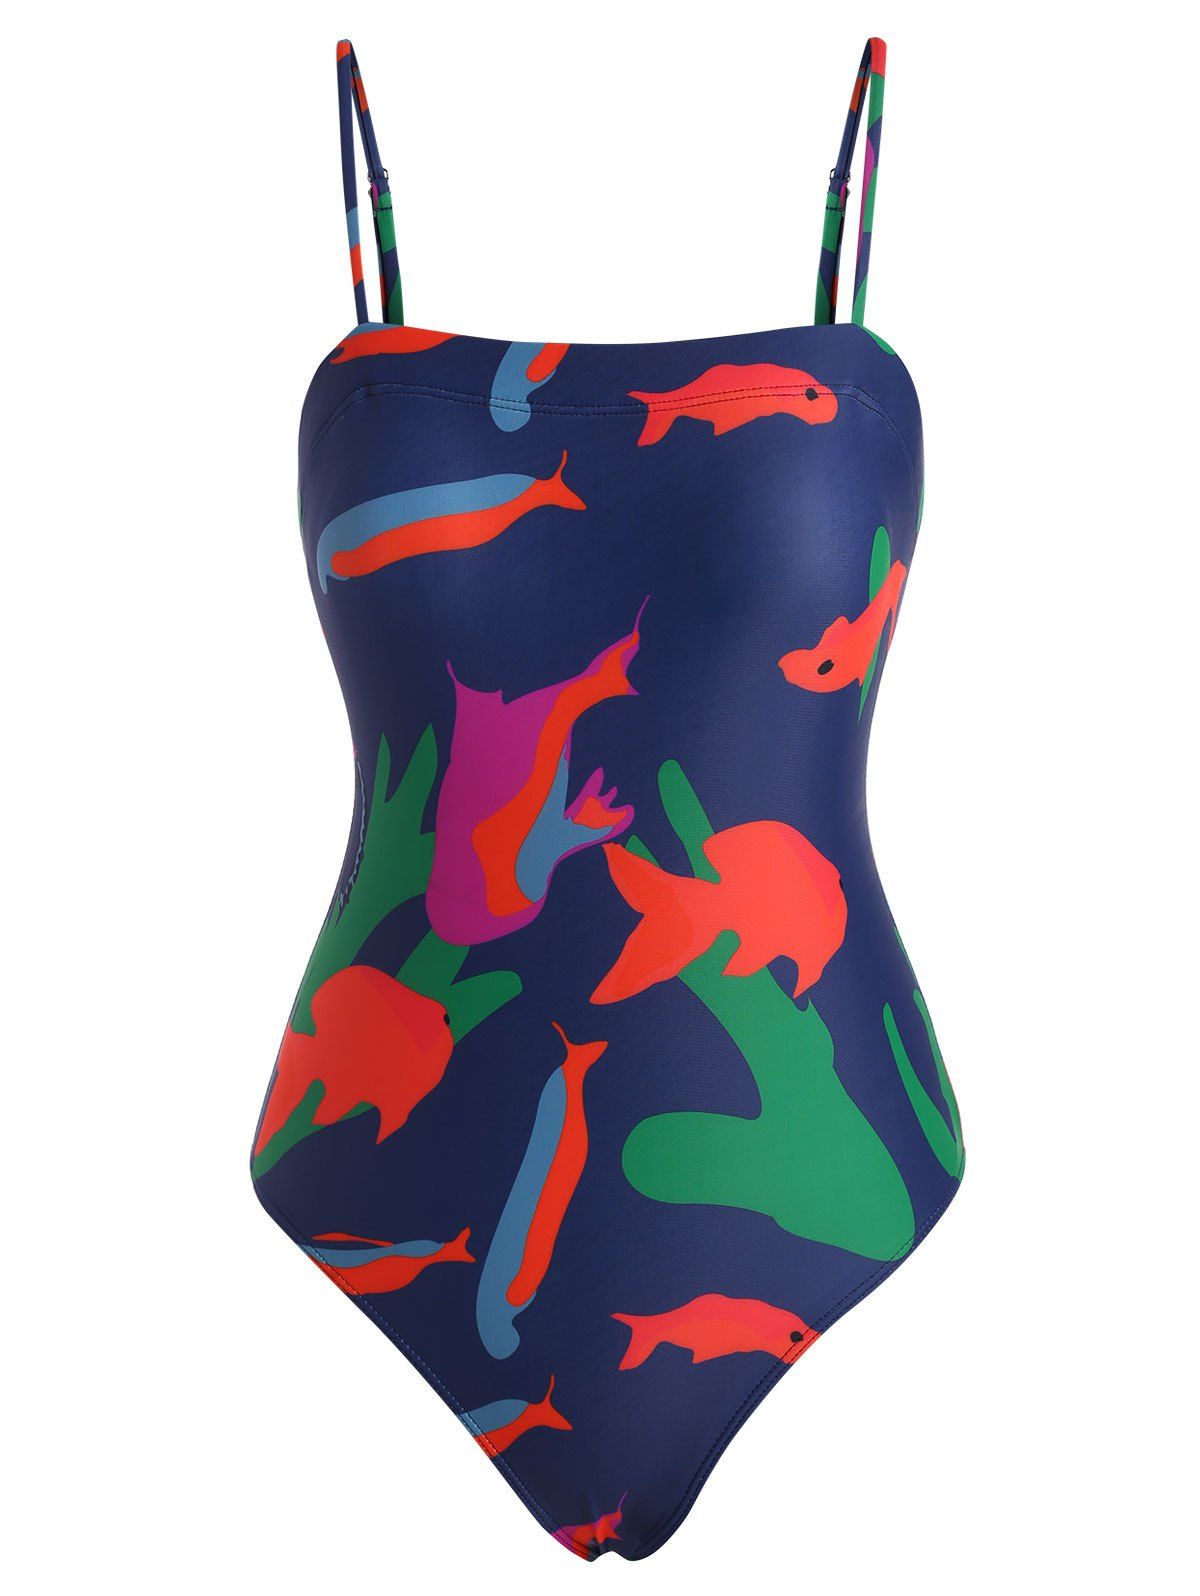 Fish Print Cami One-piece Swimsuit - multicolor L